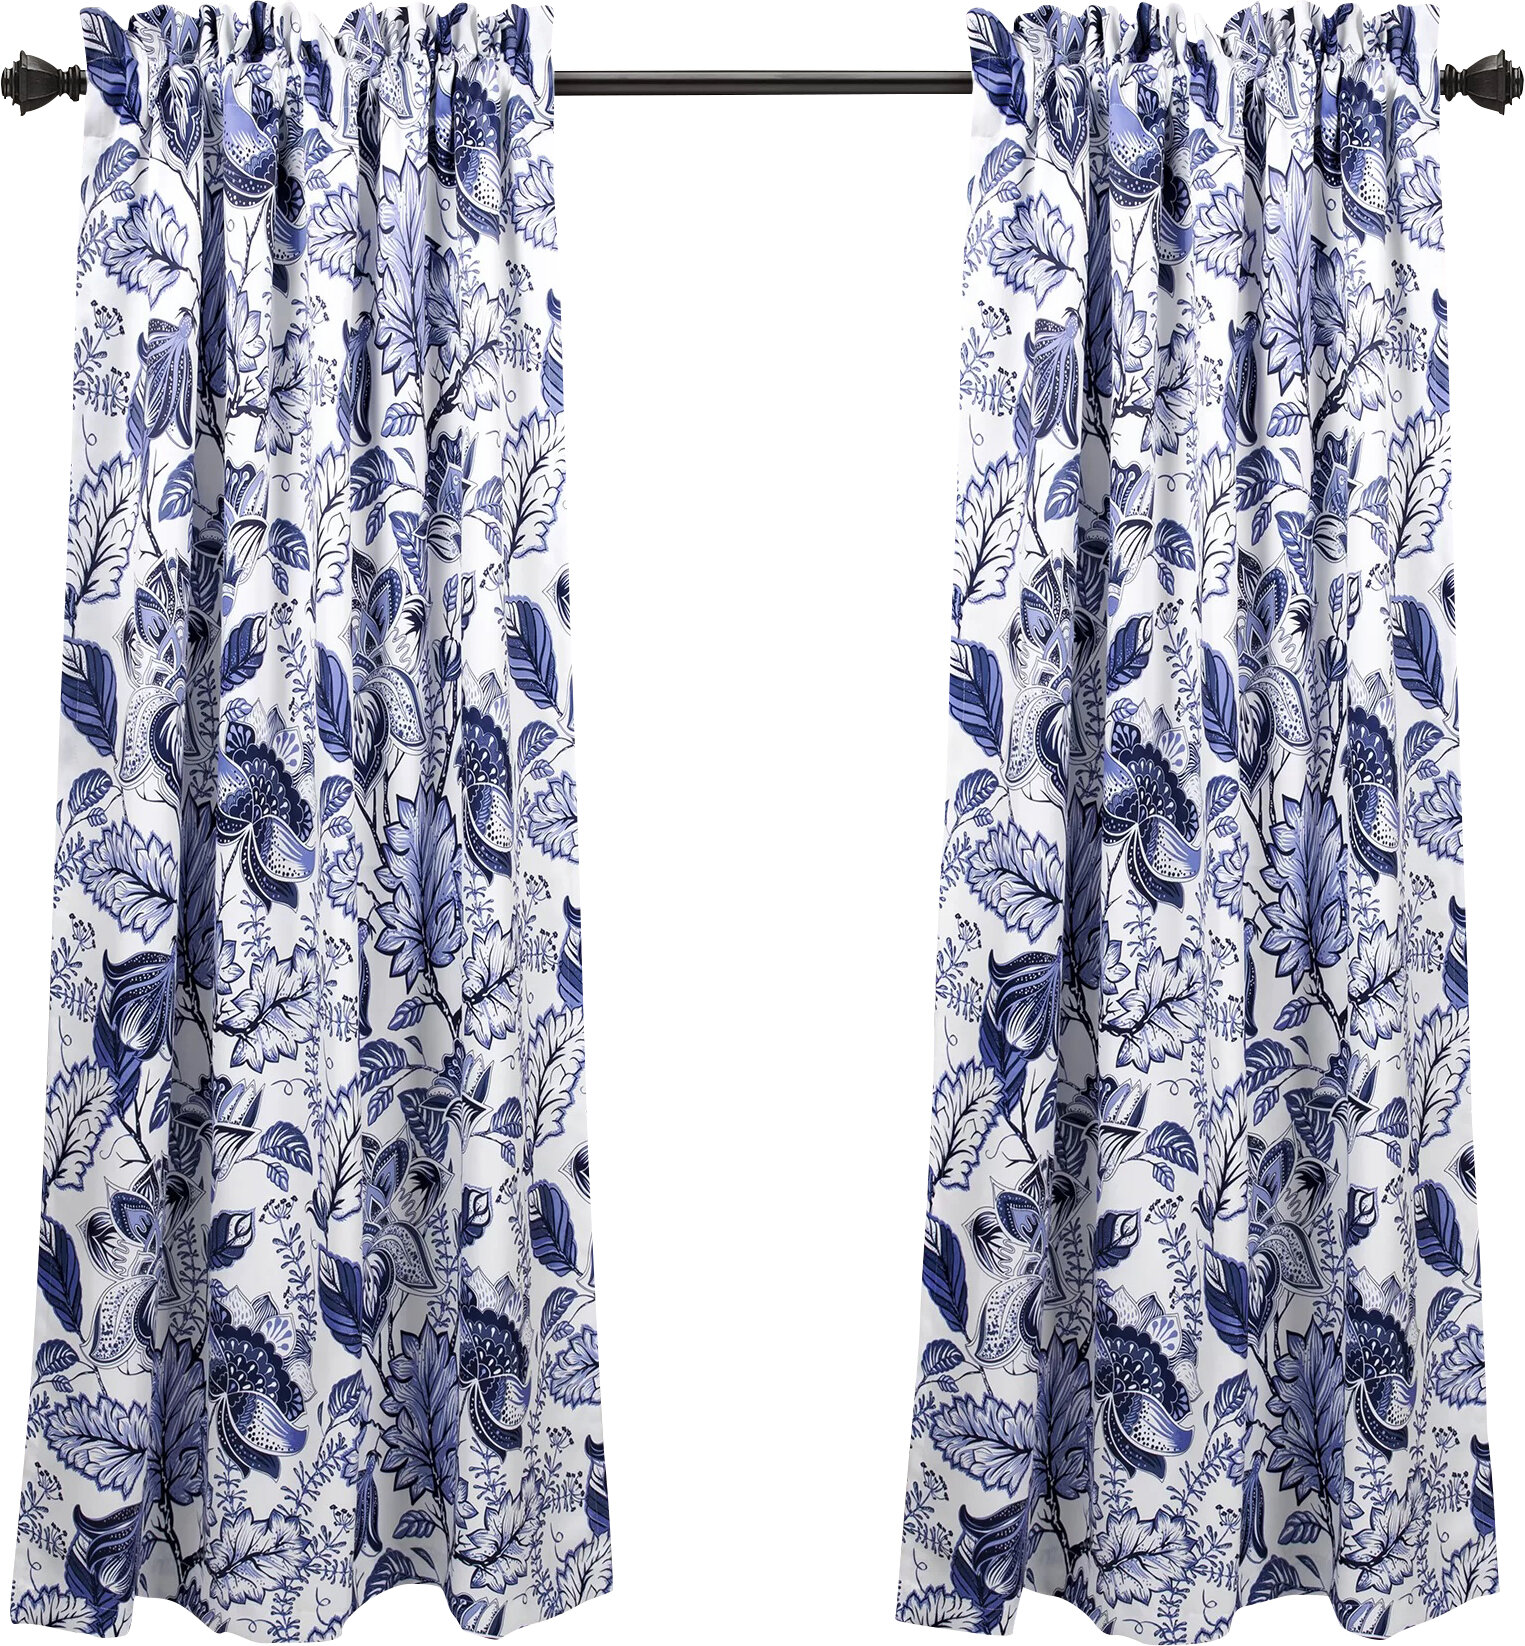 Exquisite Floral Lined Drapes Best Home Floral Spring Rod Pocket Panel Pair